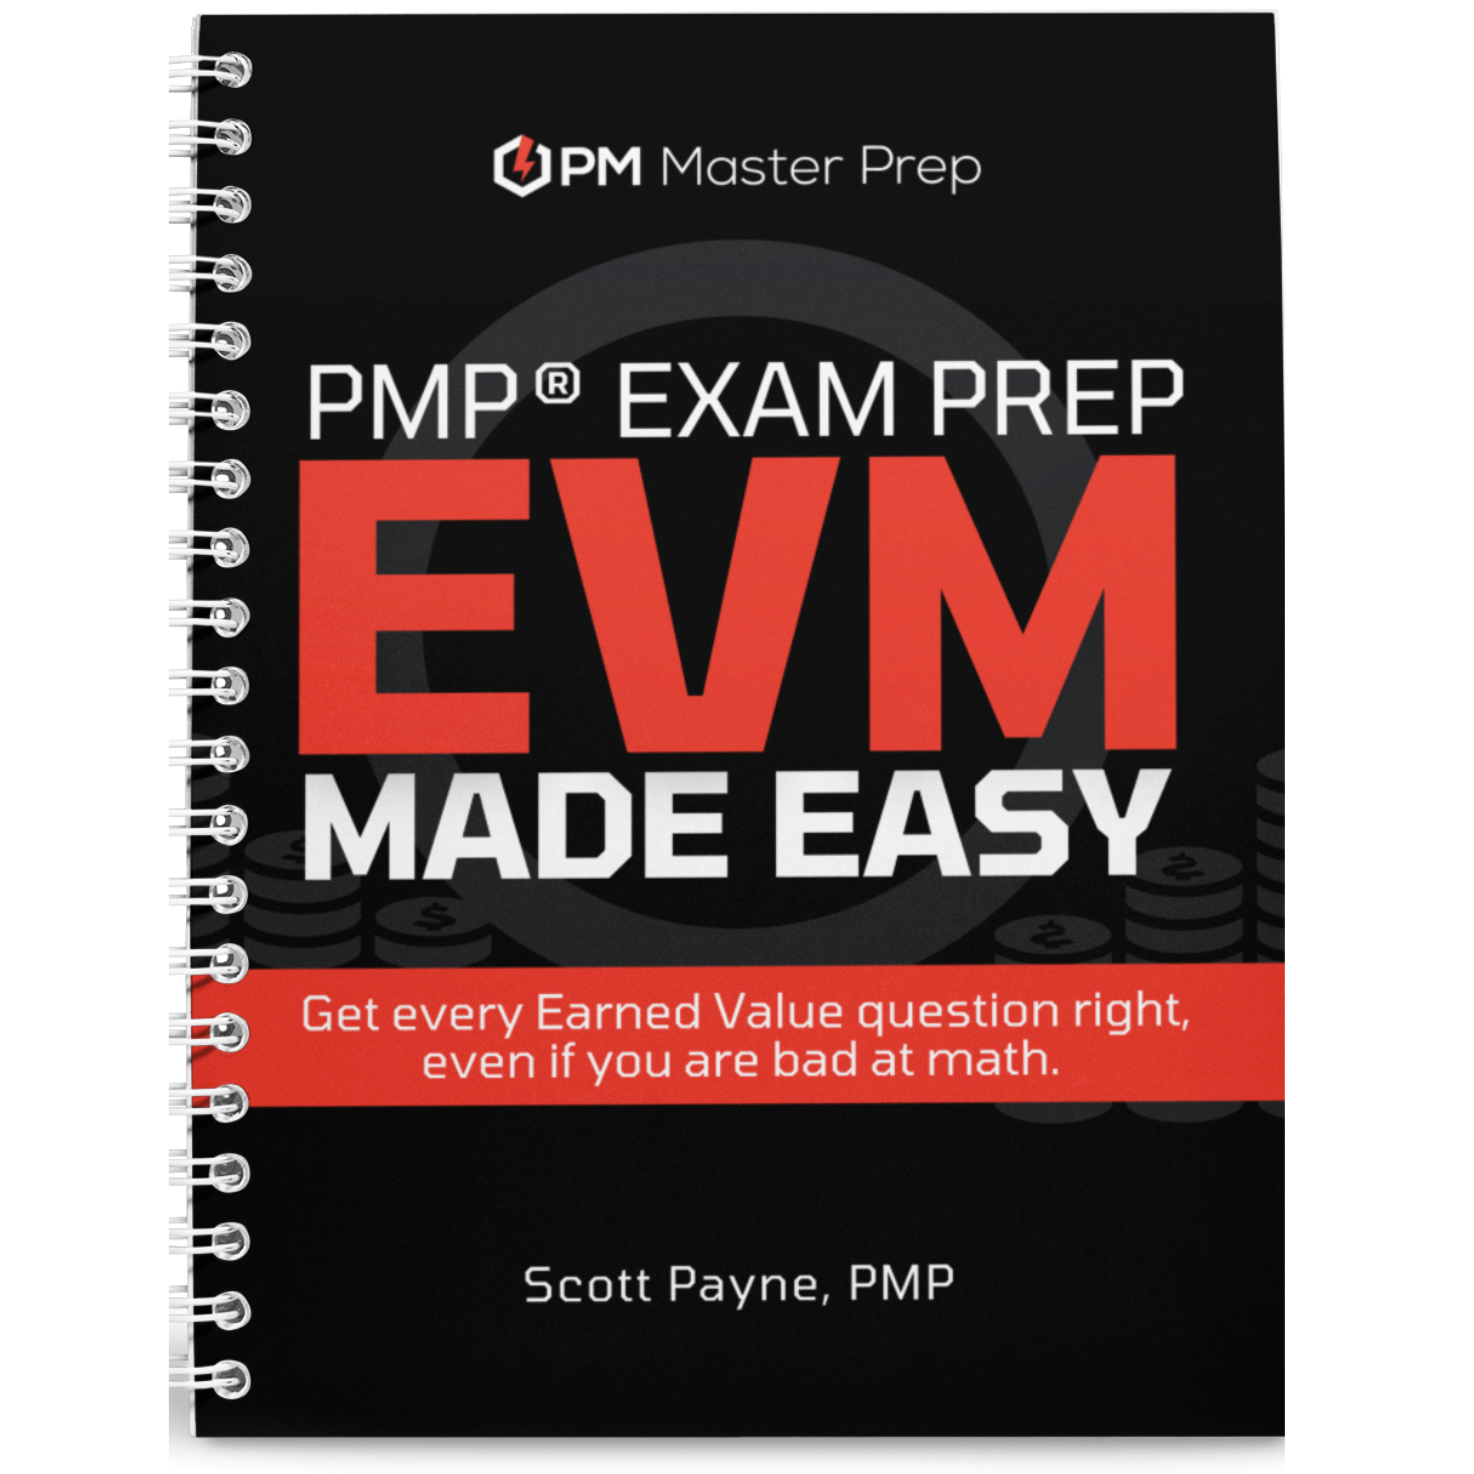 PMP Exam Prep EVM Made Easy by PM Master Prep.